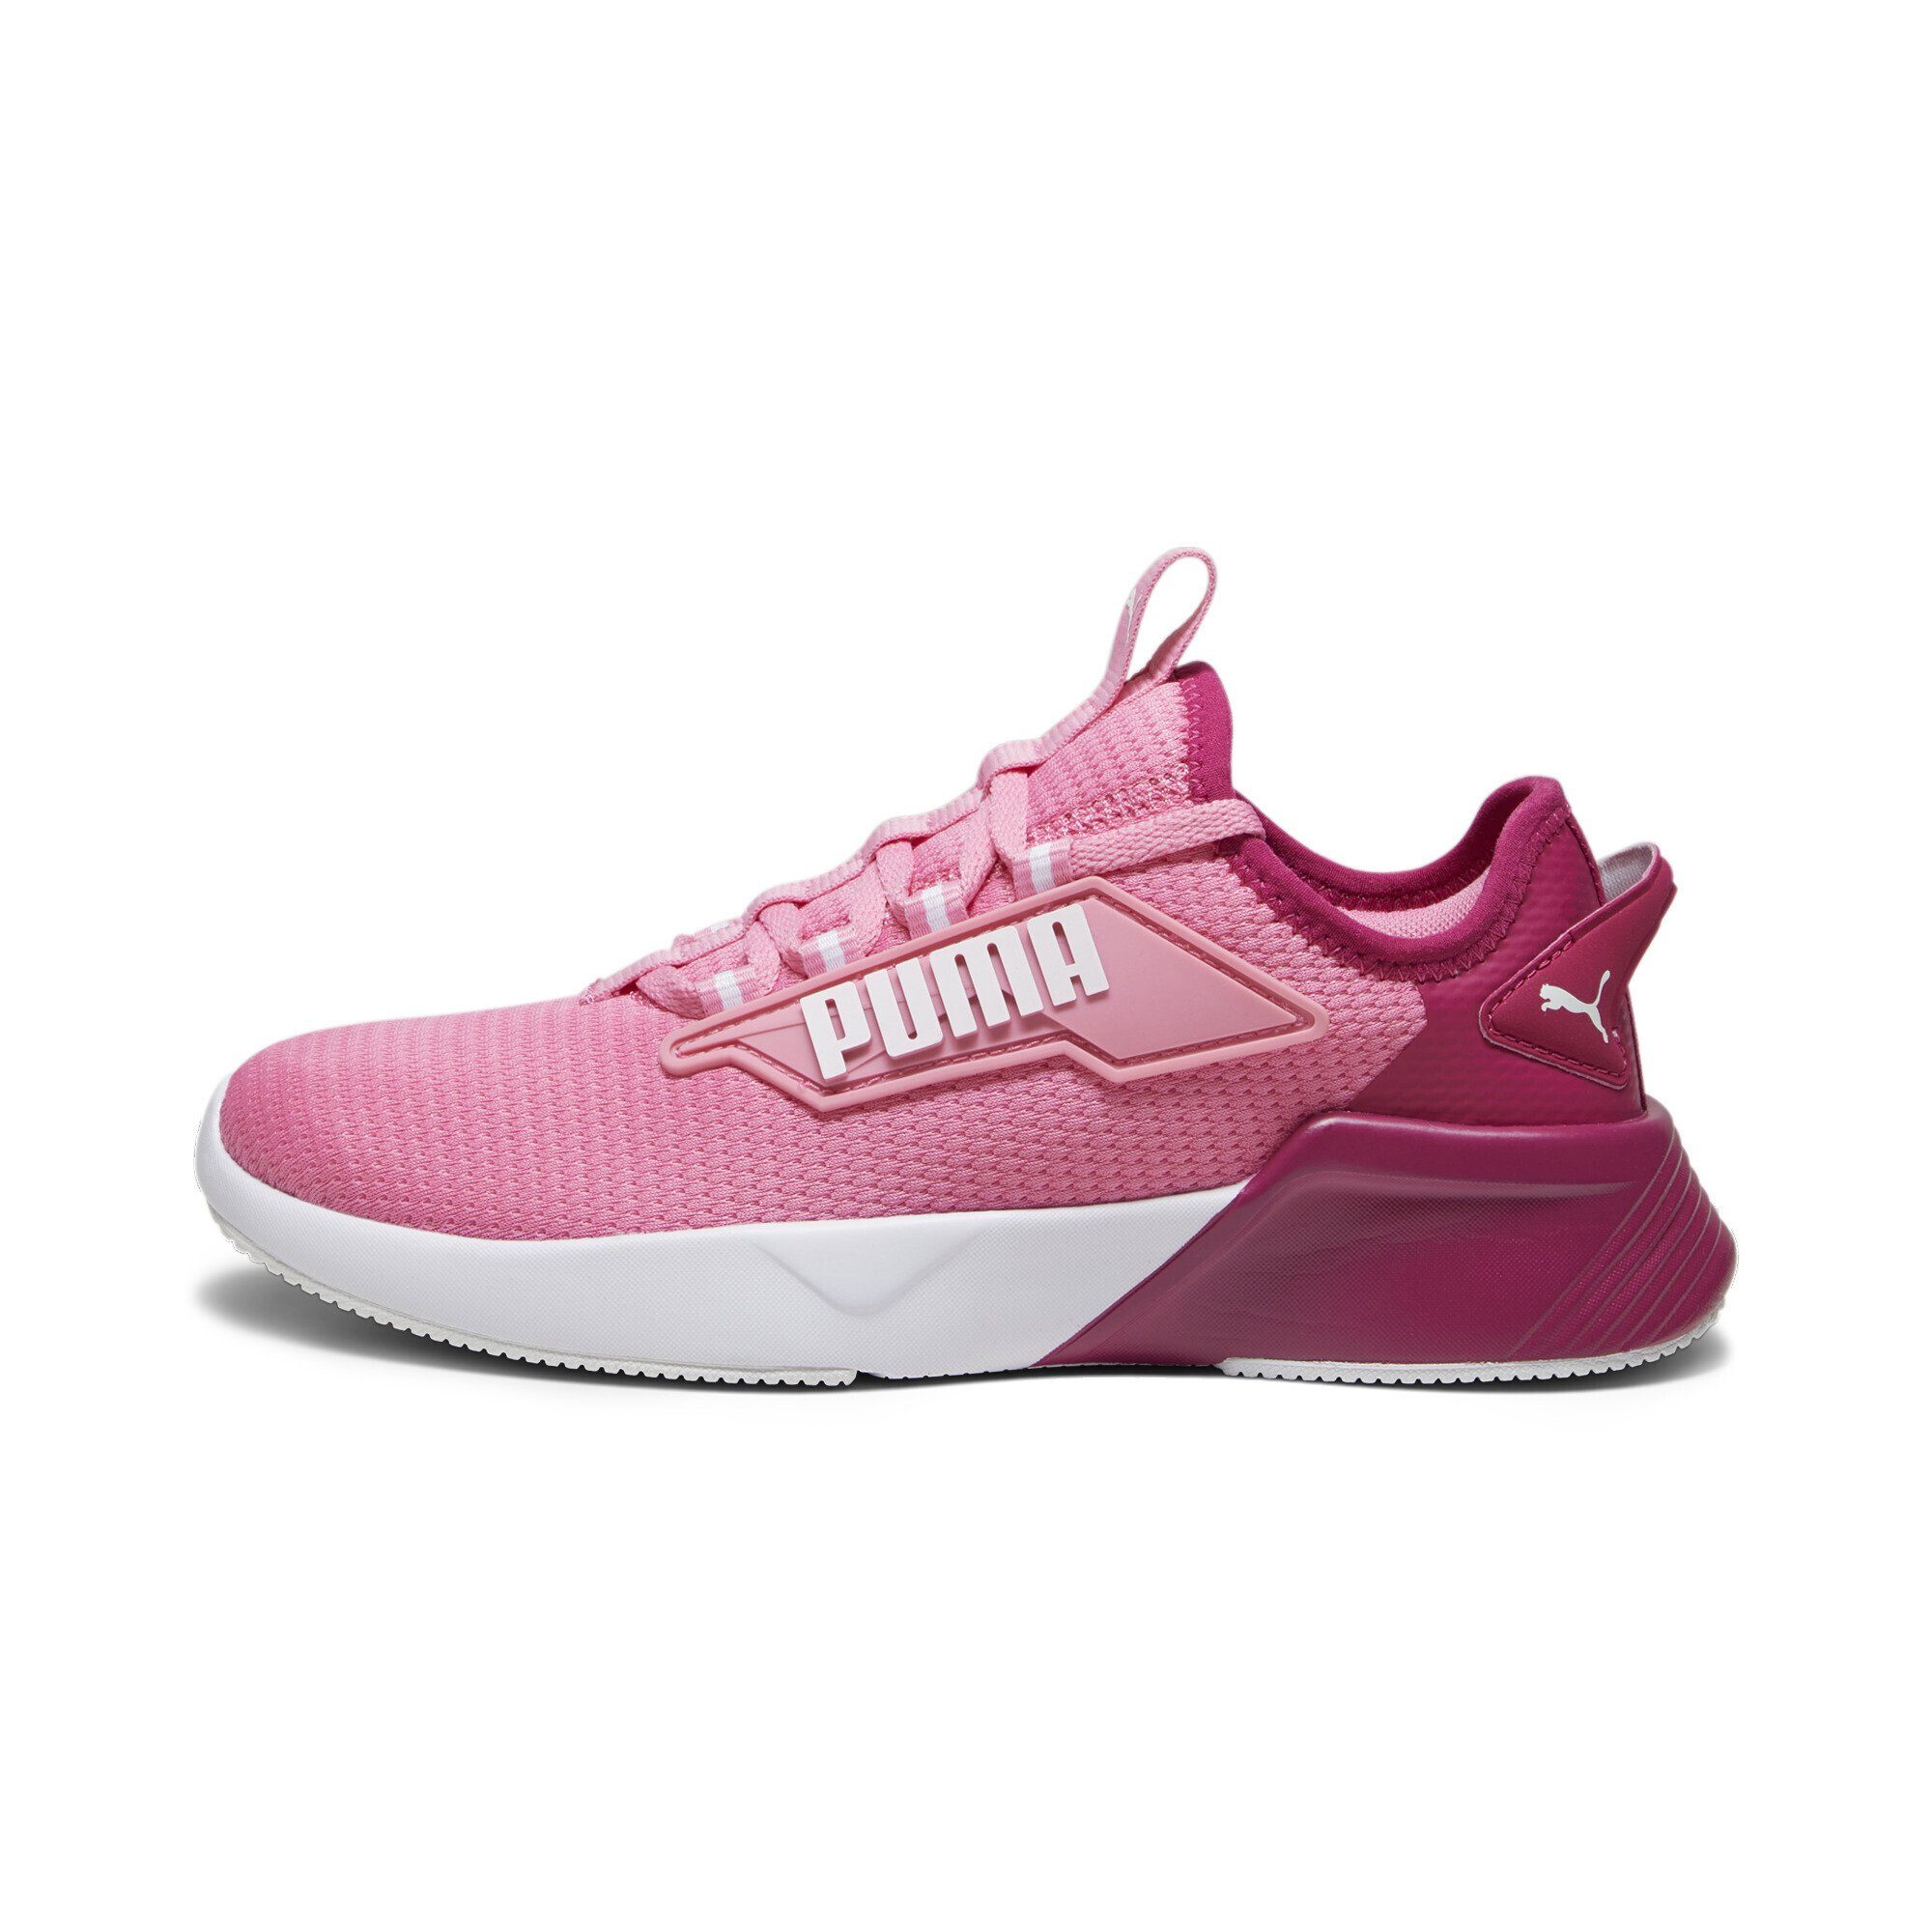 PUMA Retaliate Jugendliche White Pinktastic Strawberry Pink Burst Sneakers 2 Laufschuh